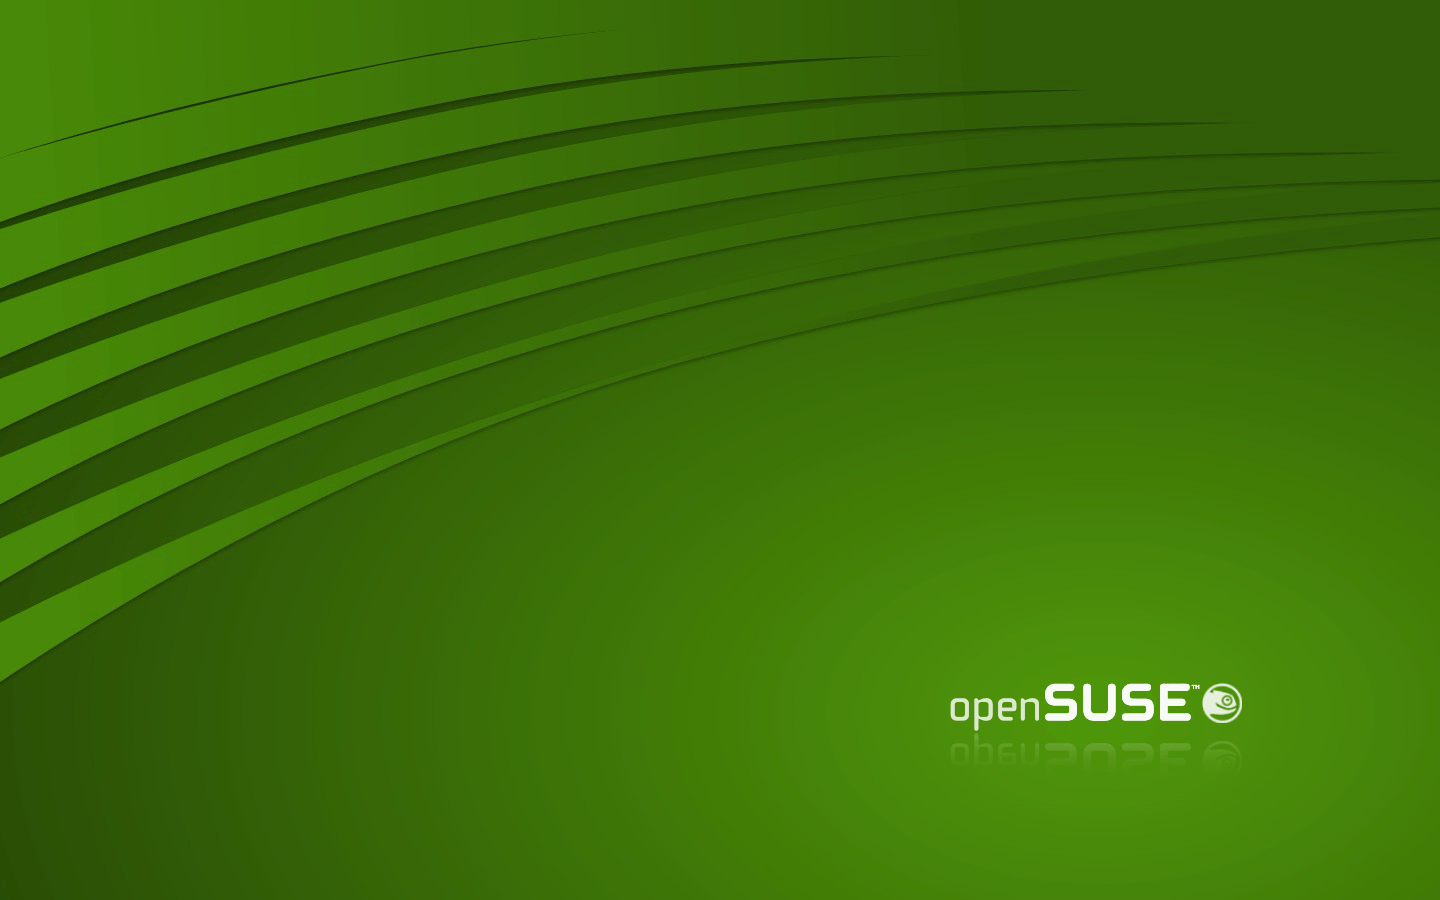 Opensuse Wallpaper